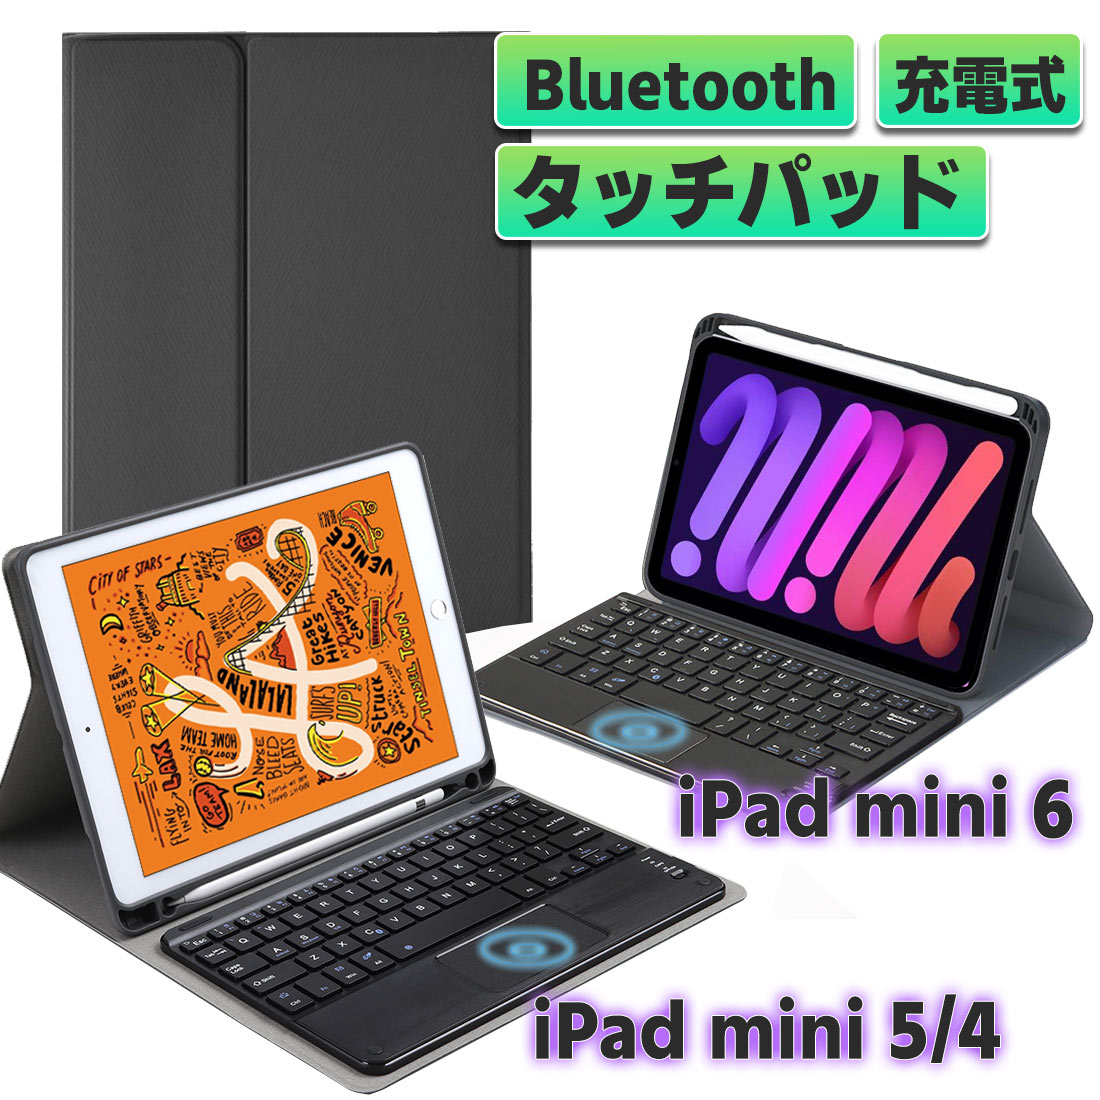 ipadキーボード iPad mini キーボード タッチパッド iPad用小型キーボード iPad mini5 mini4  Bluetooth 脱着可能 手帳型 スタンド機能付き 薄型 軽量 スリム マウス ペンホルダー Agenstar ブラック ネイビー 黒